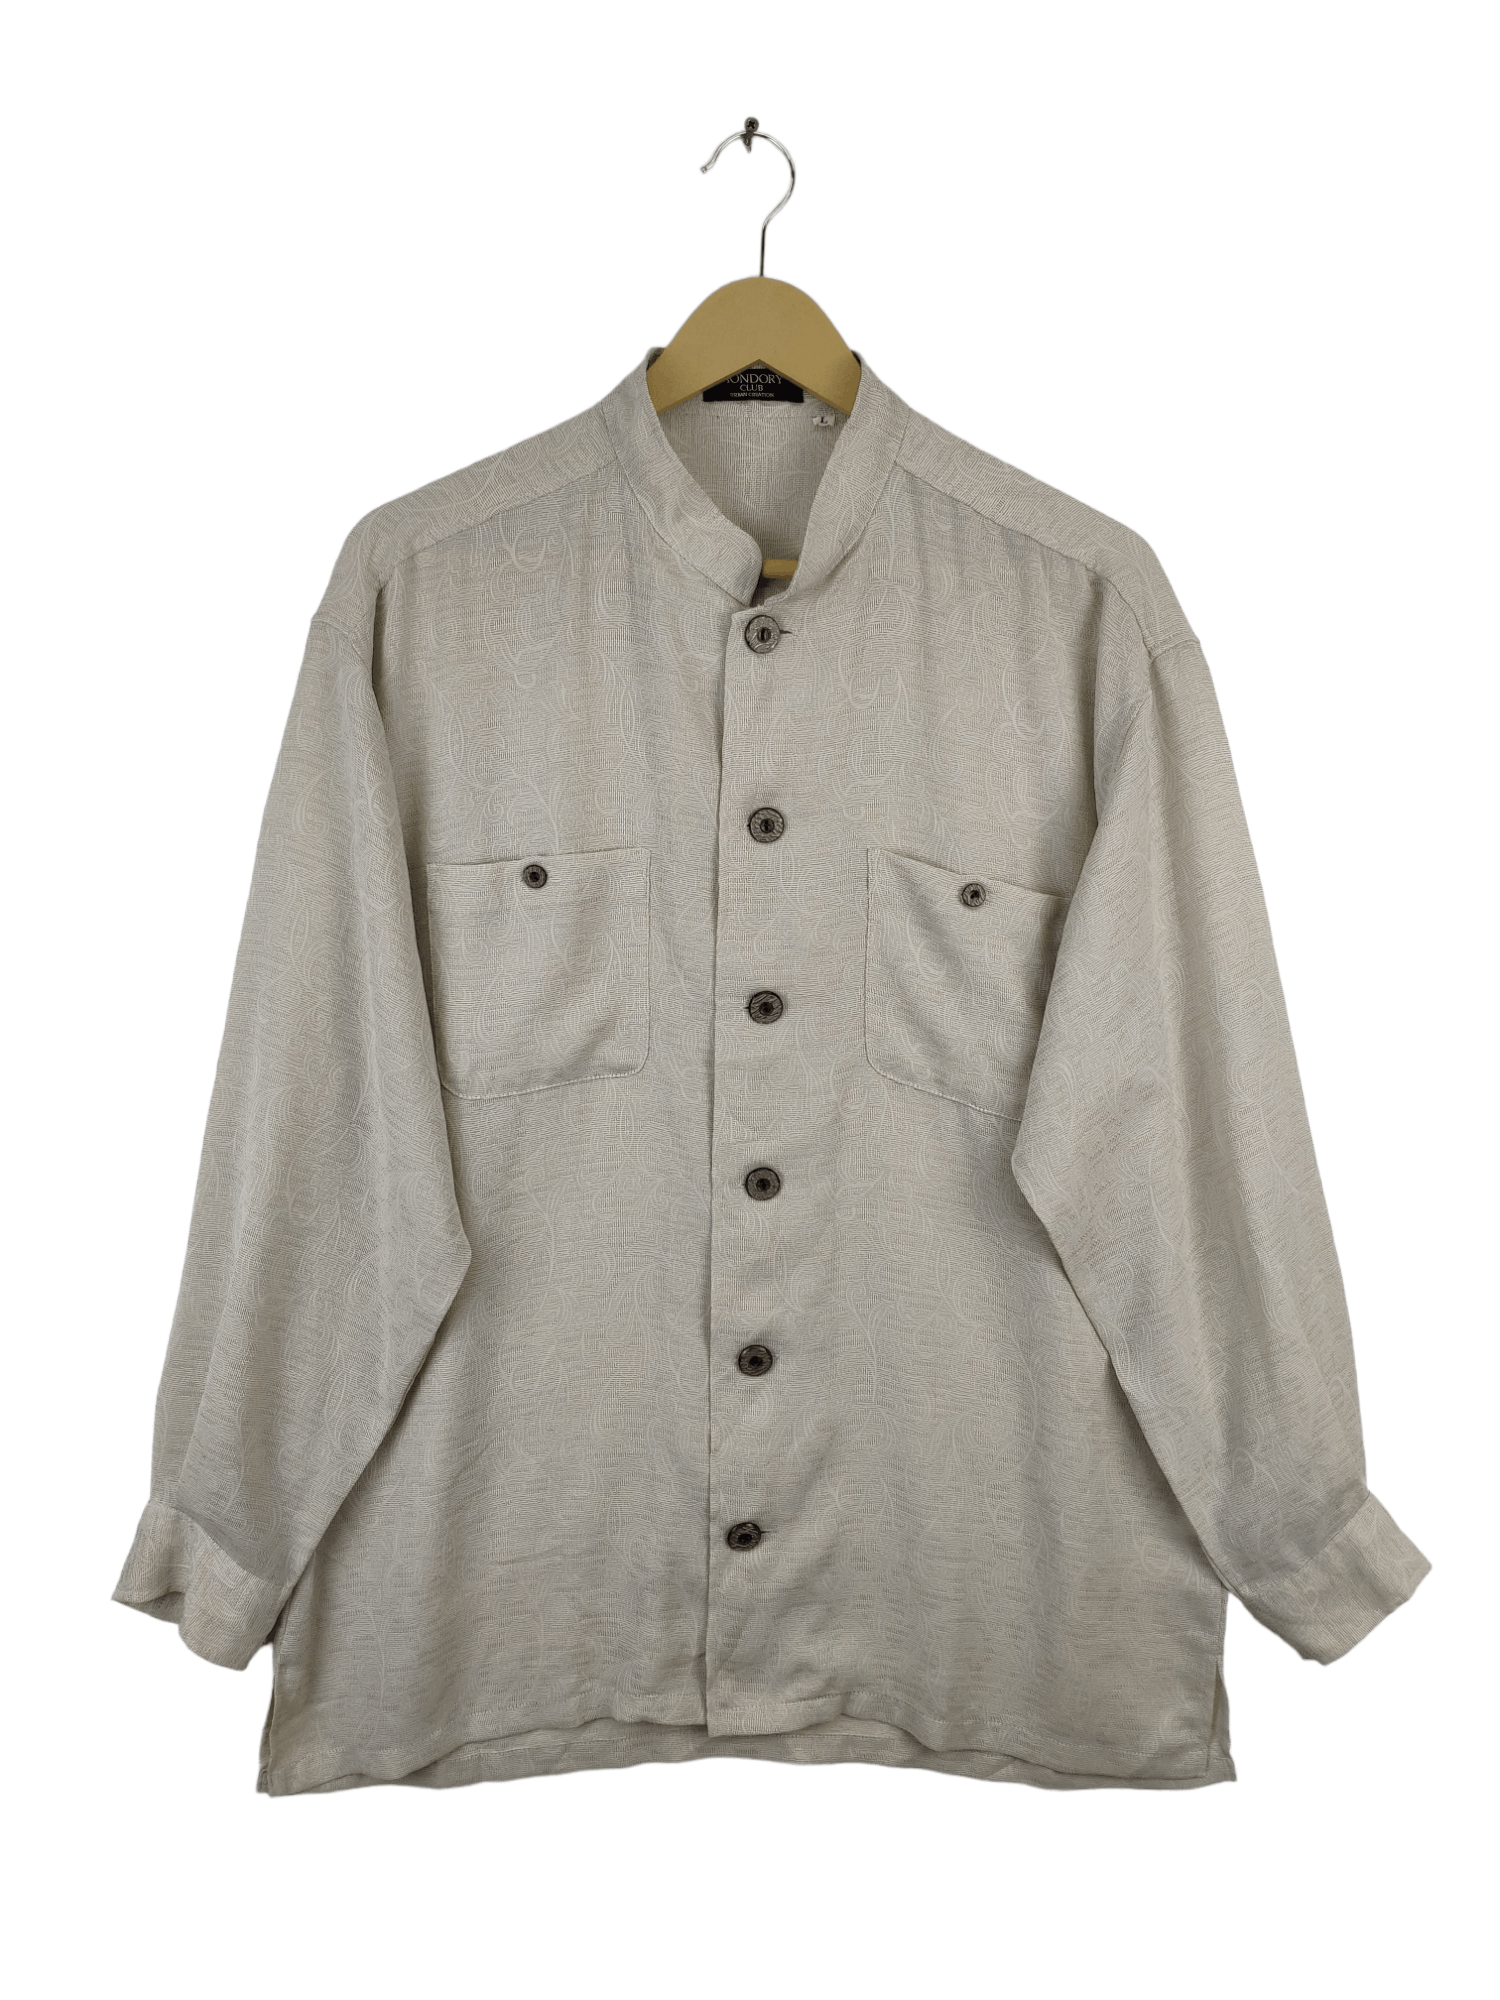 Vintage Vintage Shirt Button Up Floral Motif by Mondory Club